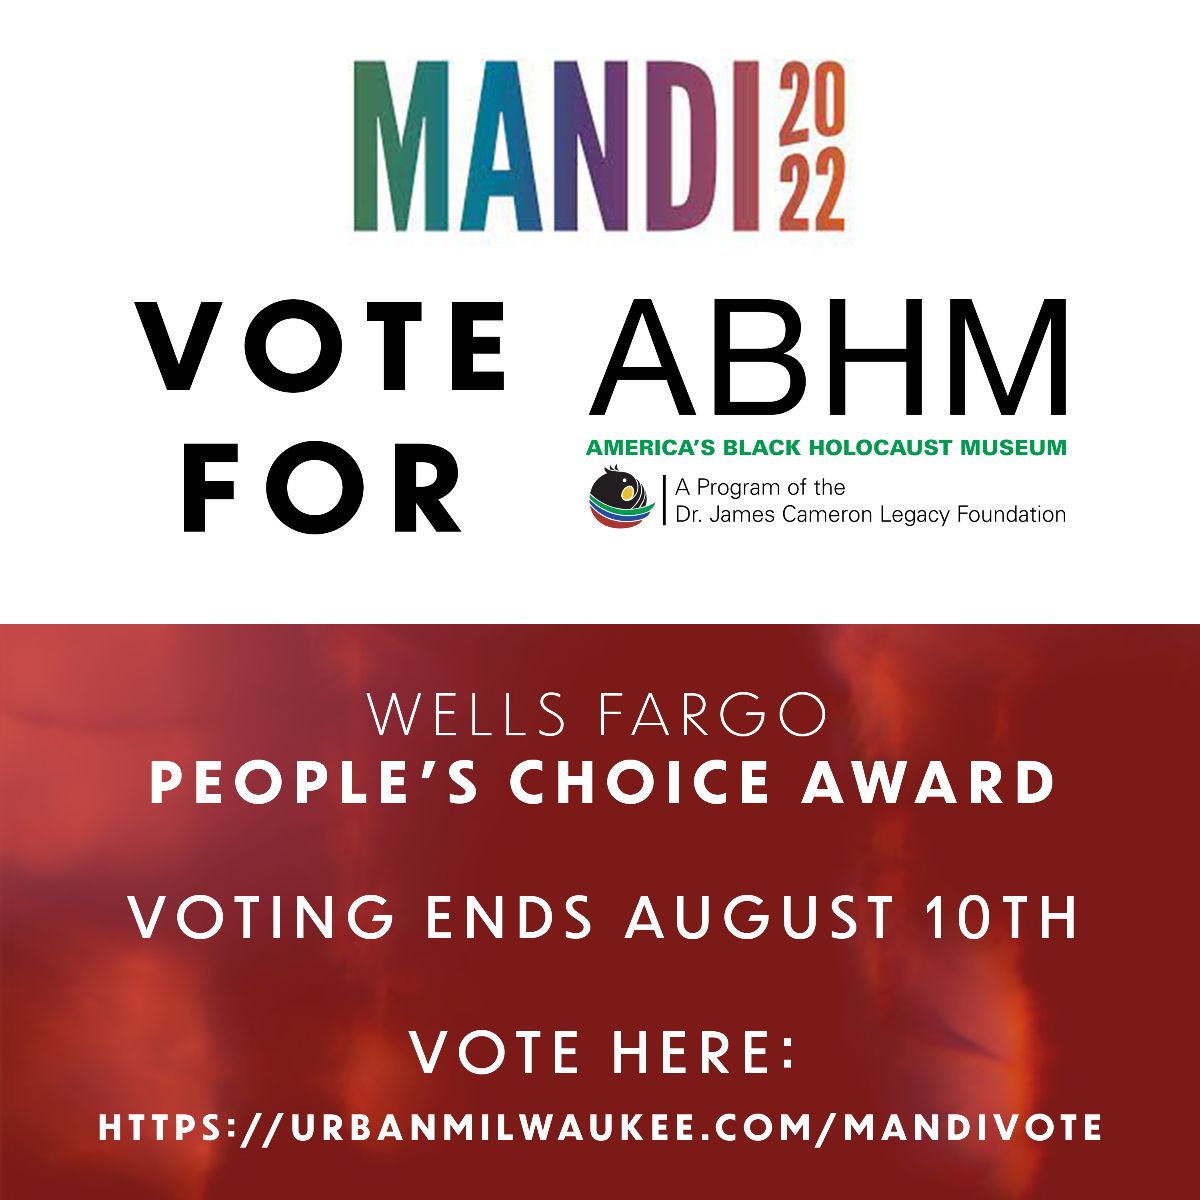 Vote for ABHM in the 2022 Mandi Awards America's Black Holocaust Museum